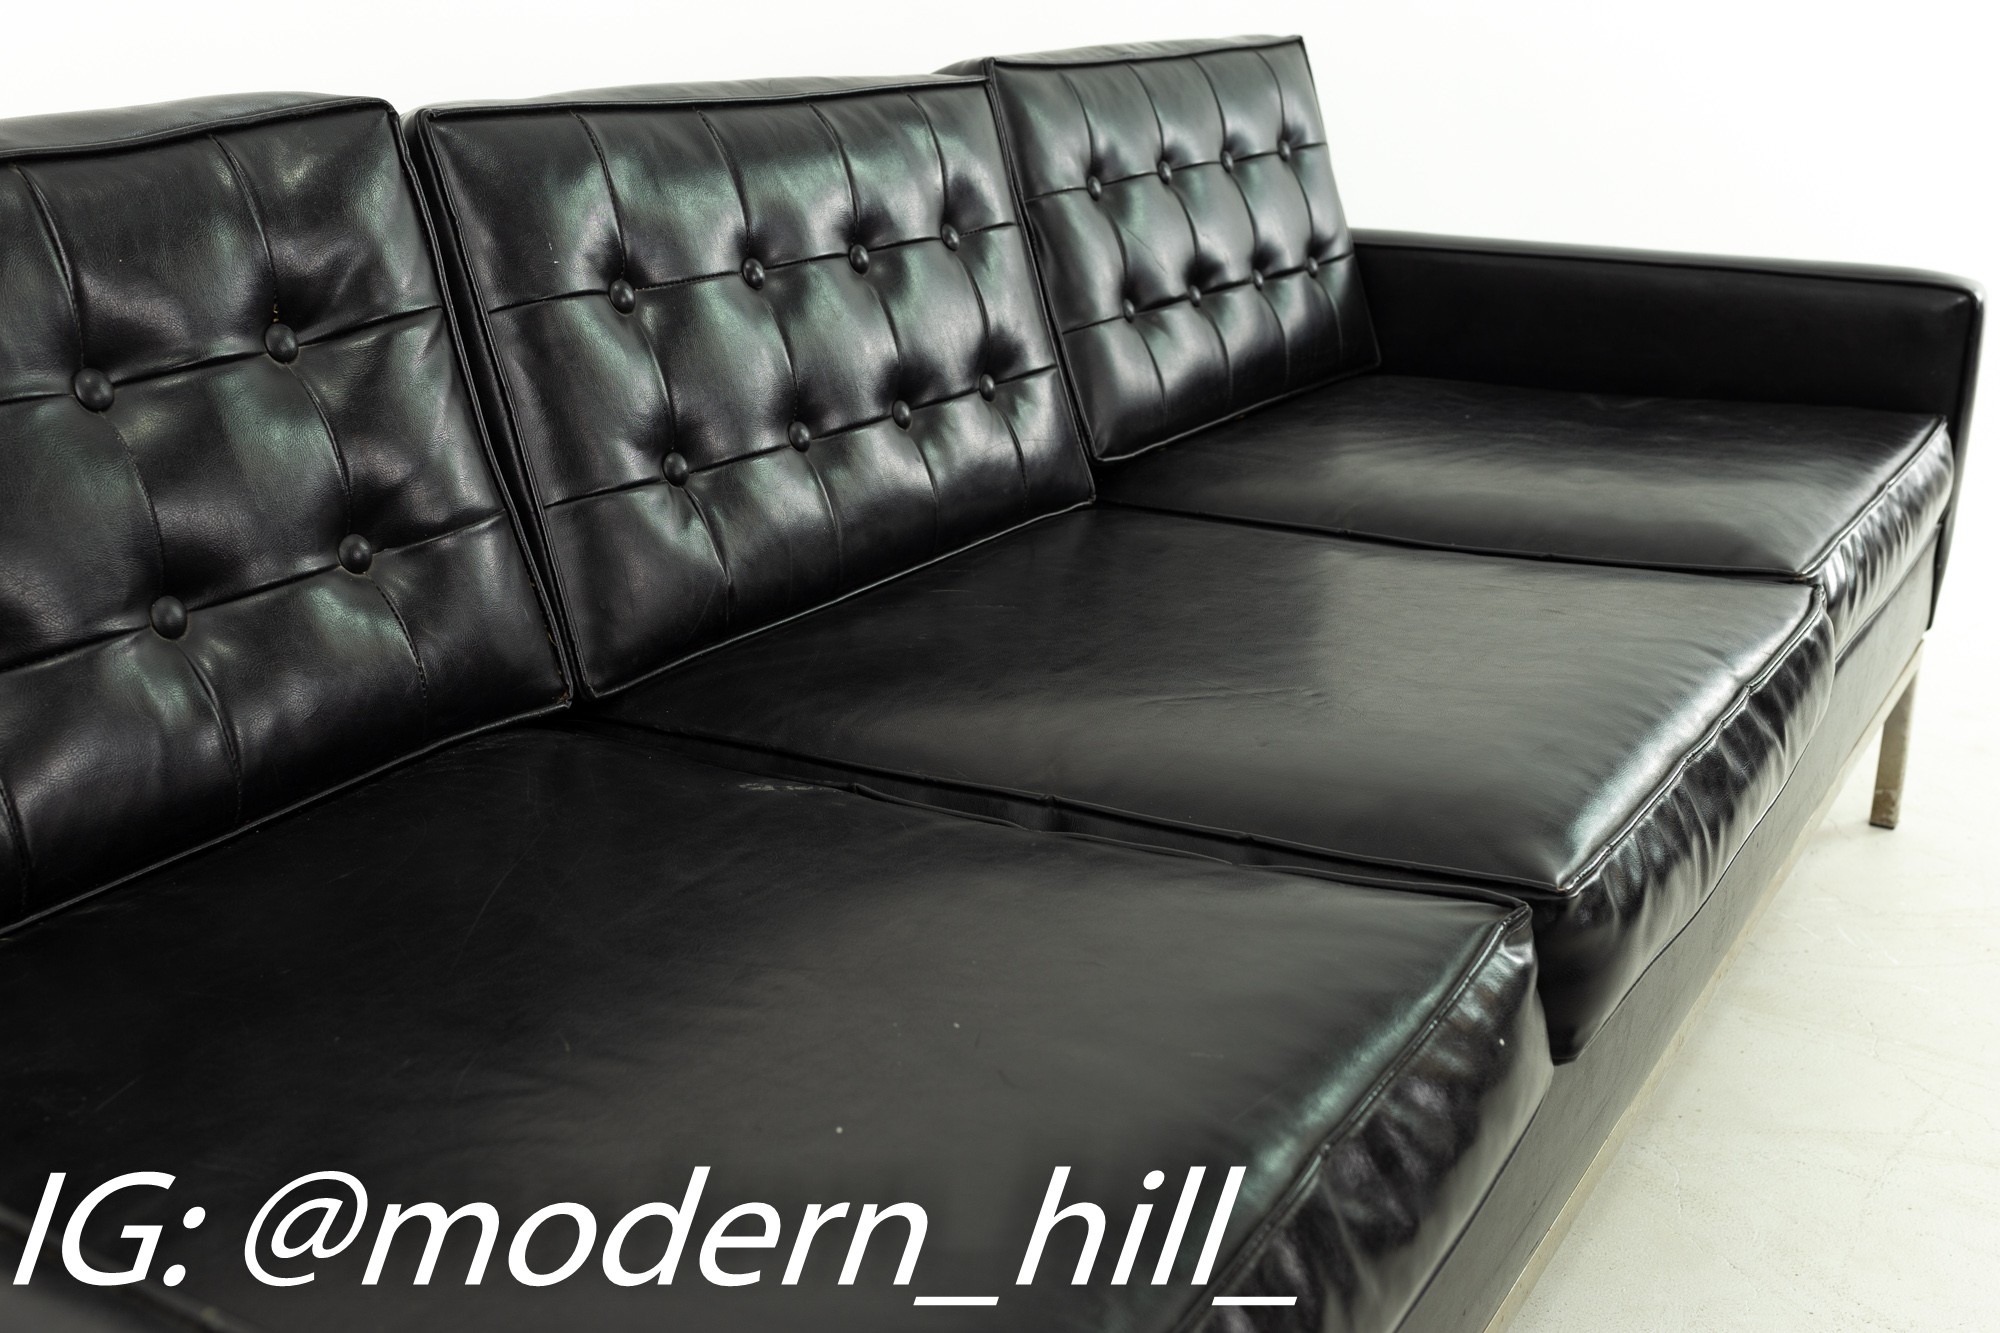 Marden Furniture Mid Century Black Leather and Chrome Sofa